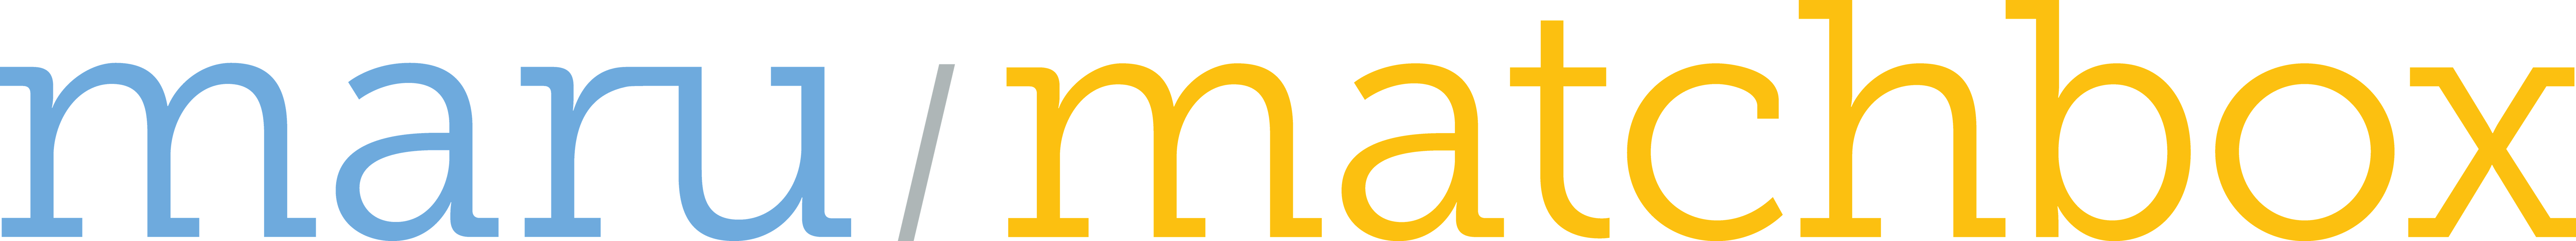 Matchbox Logo - Maru/Matchbox | MediaVillage